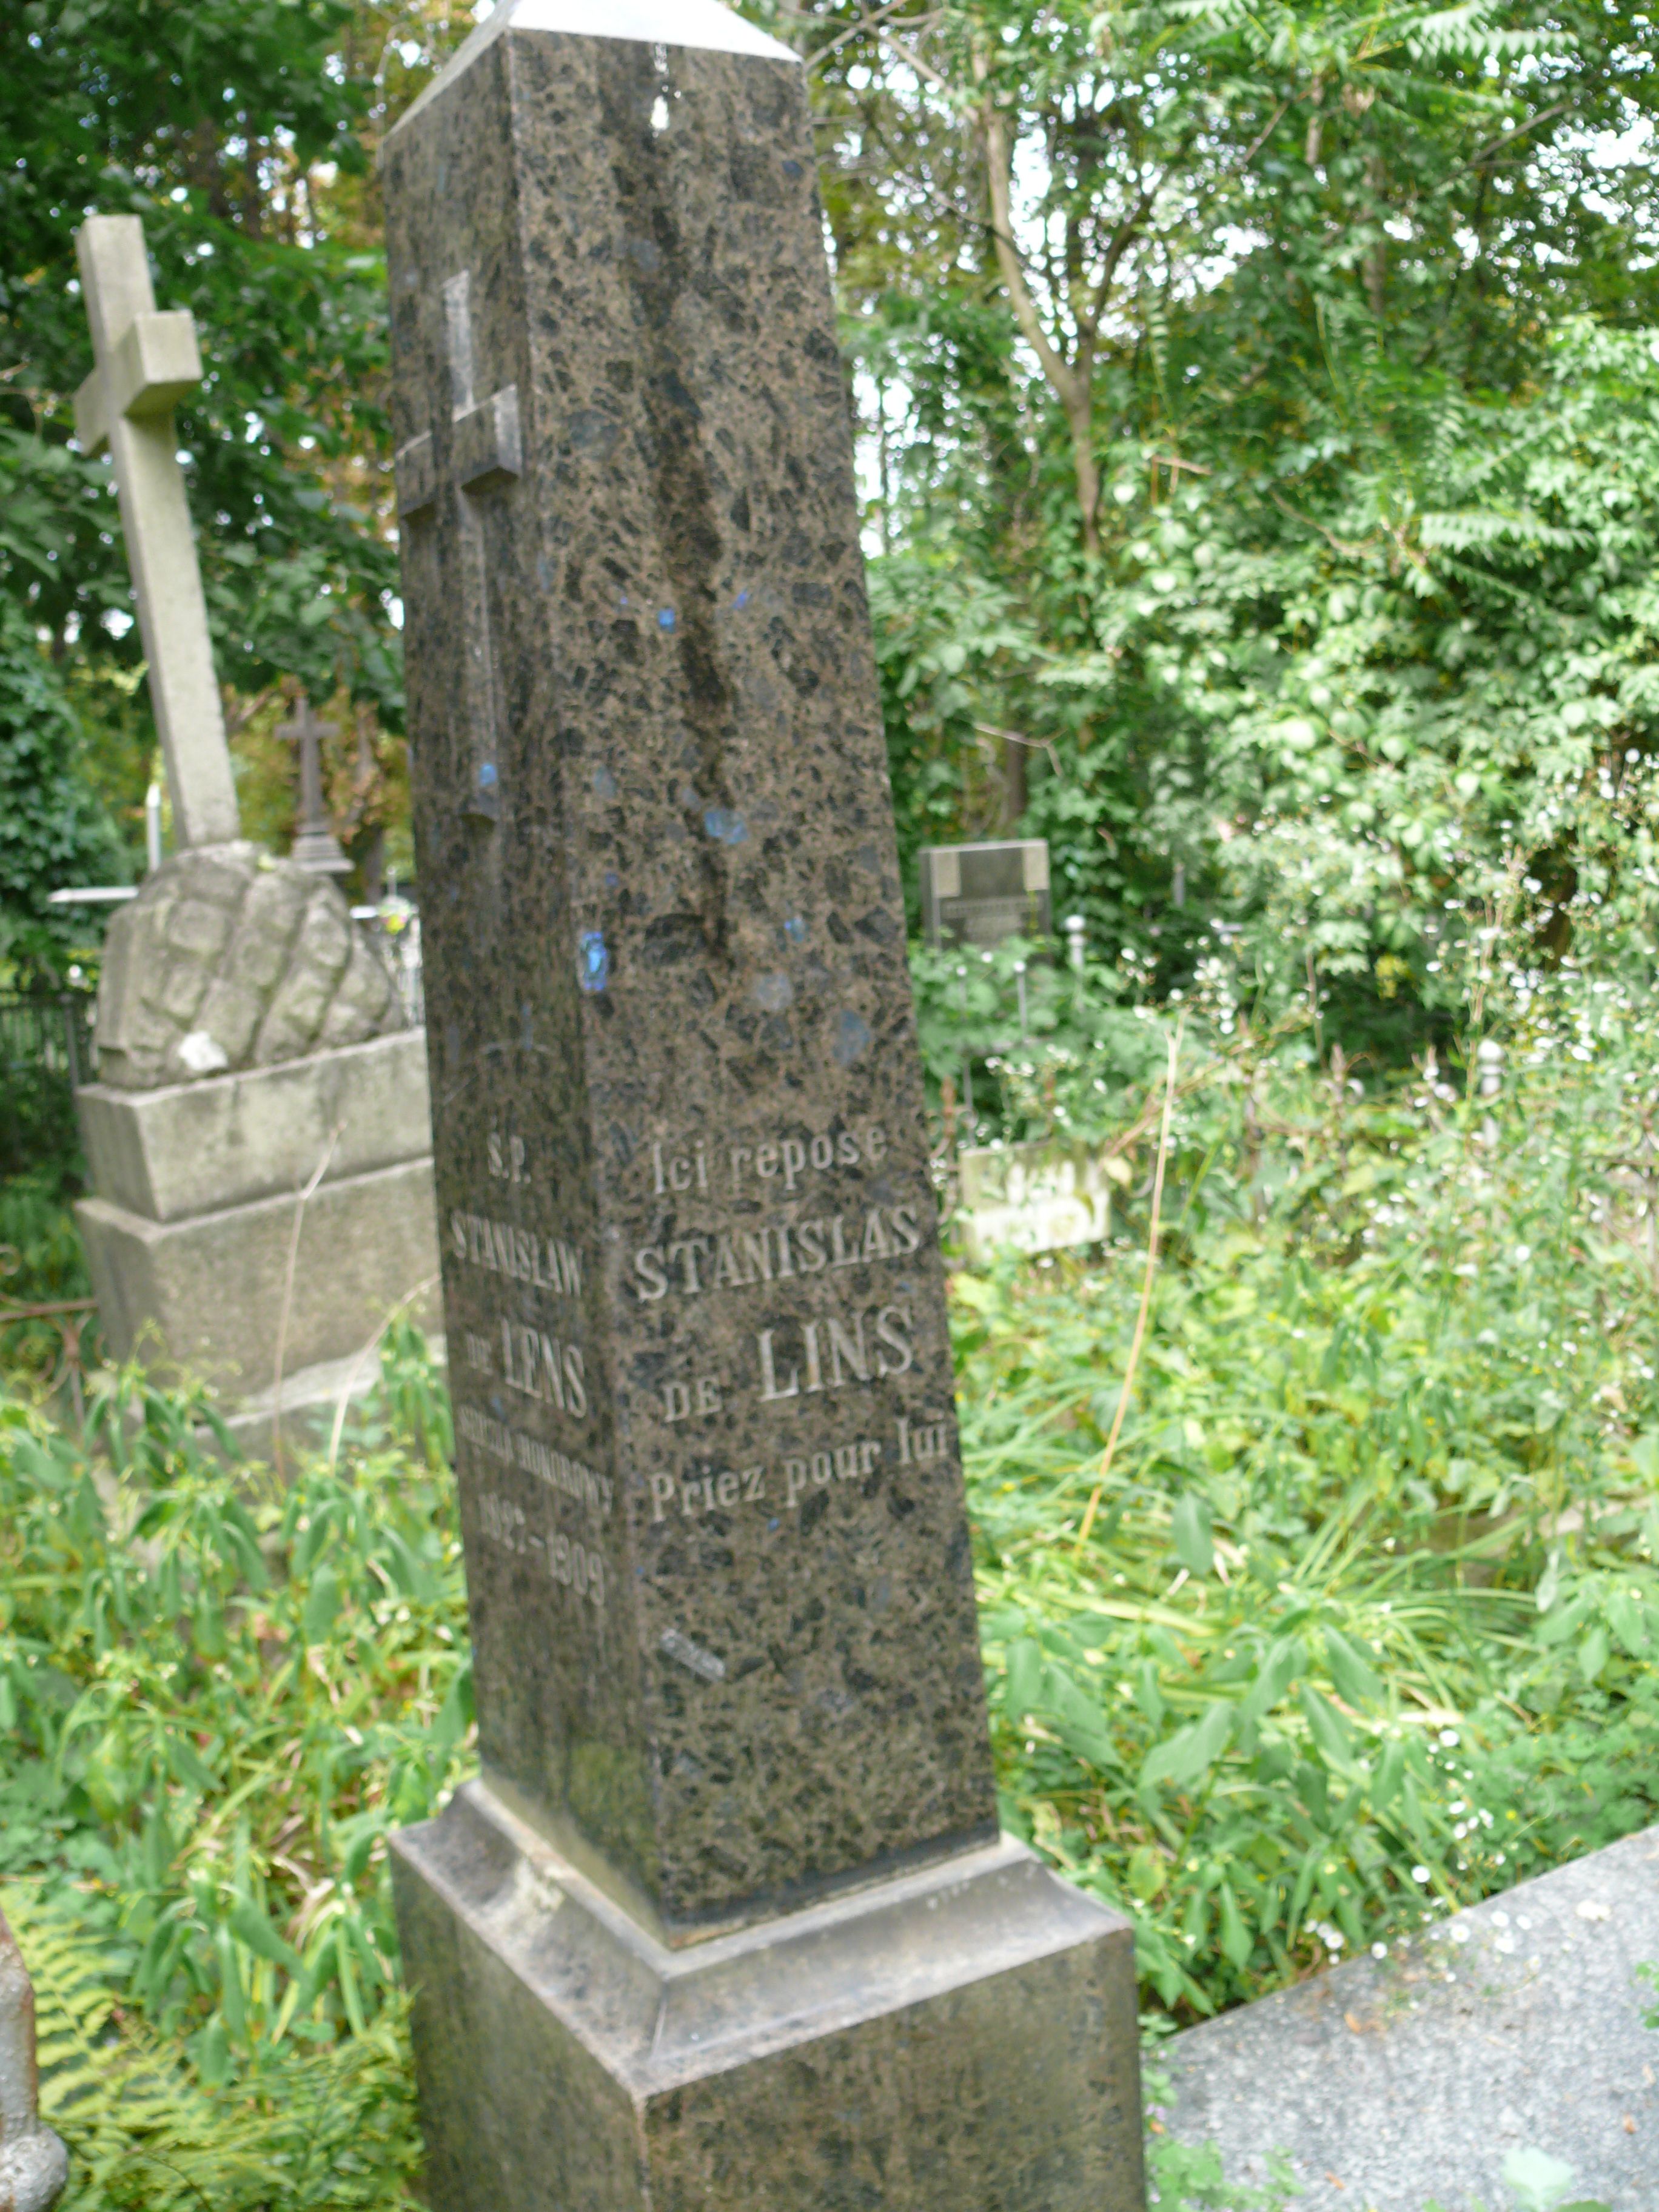 Tombstone of Stanislas de Lens and Stanislas de Lins